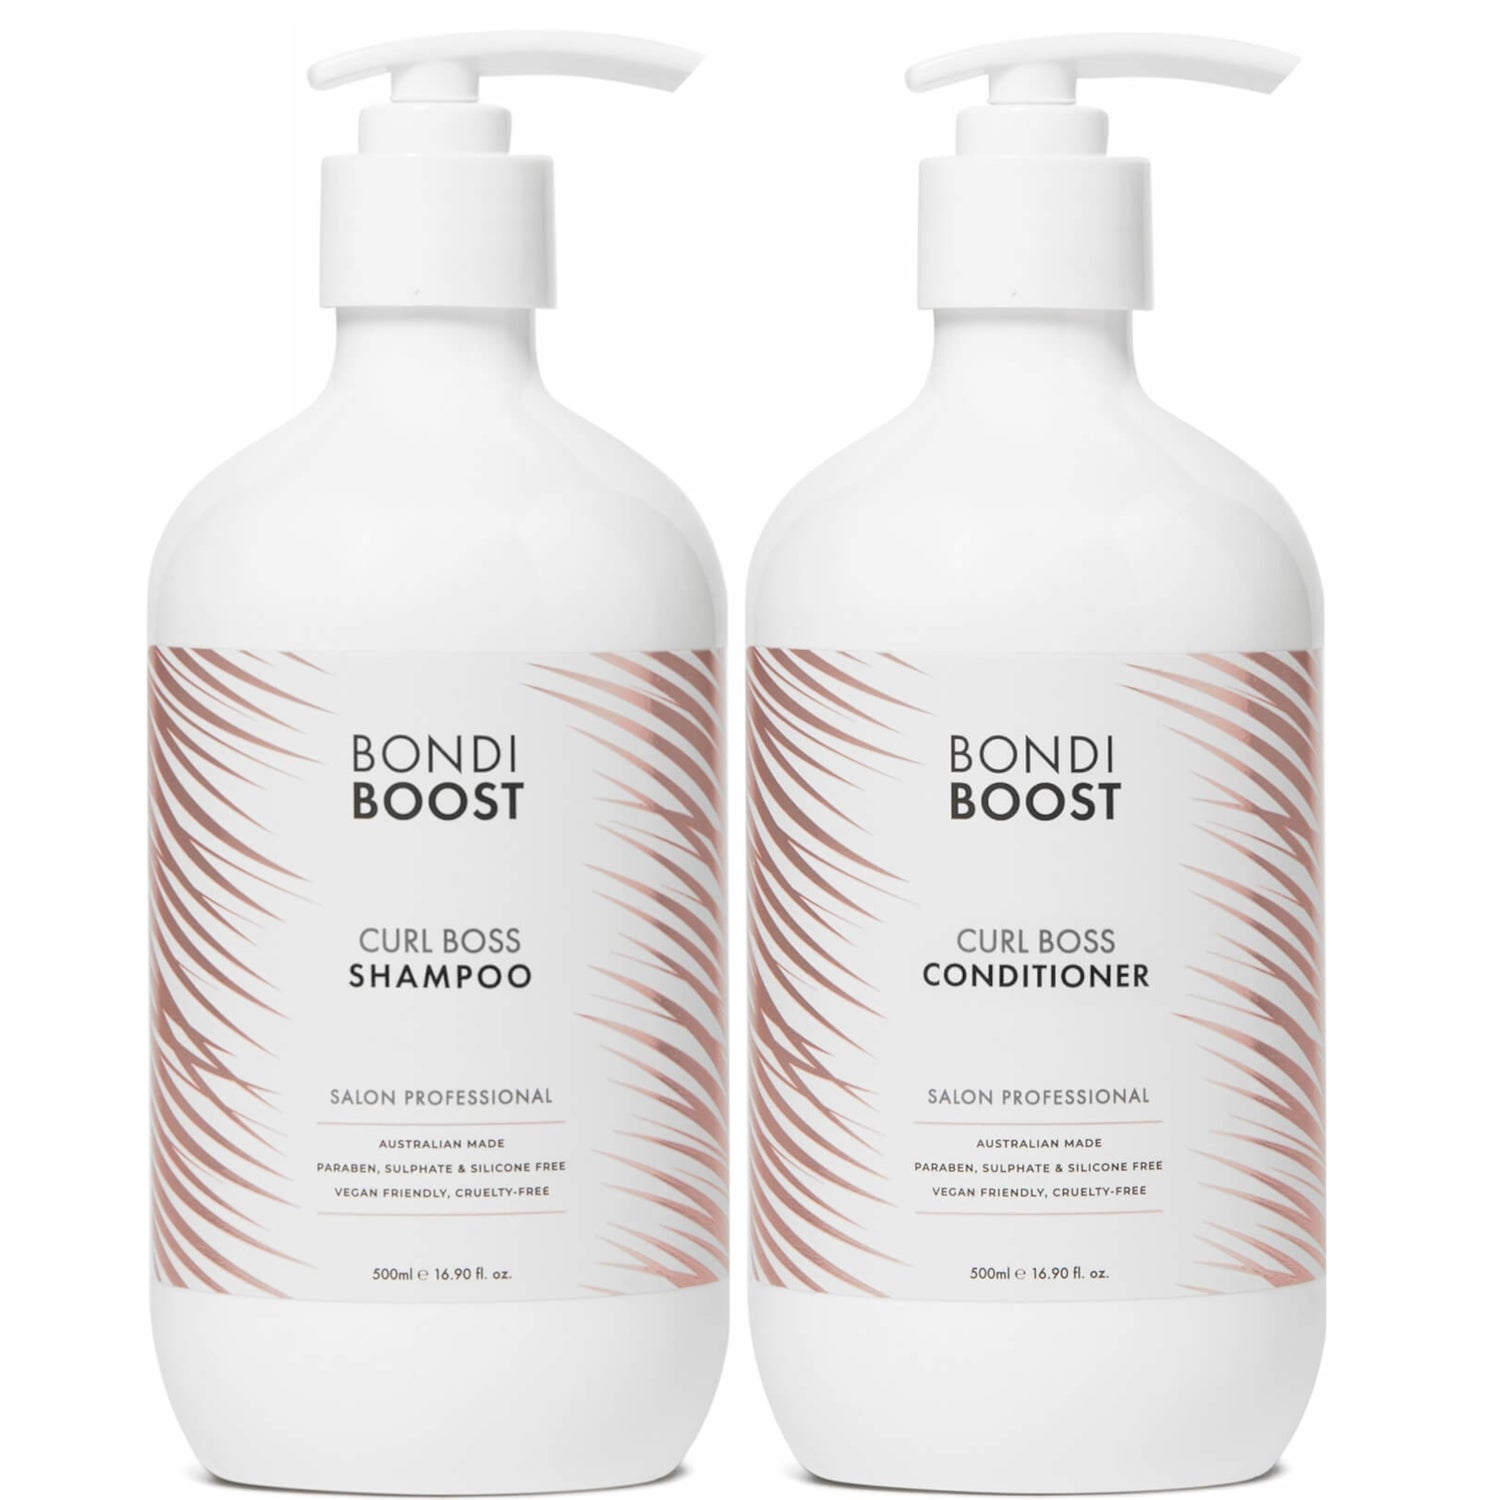 BondiBoost Curl Boss Shampoo and Conditioner 500ml Bundle